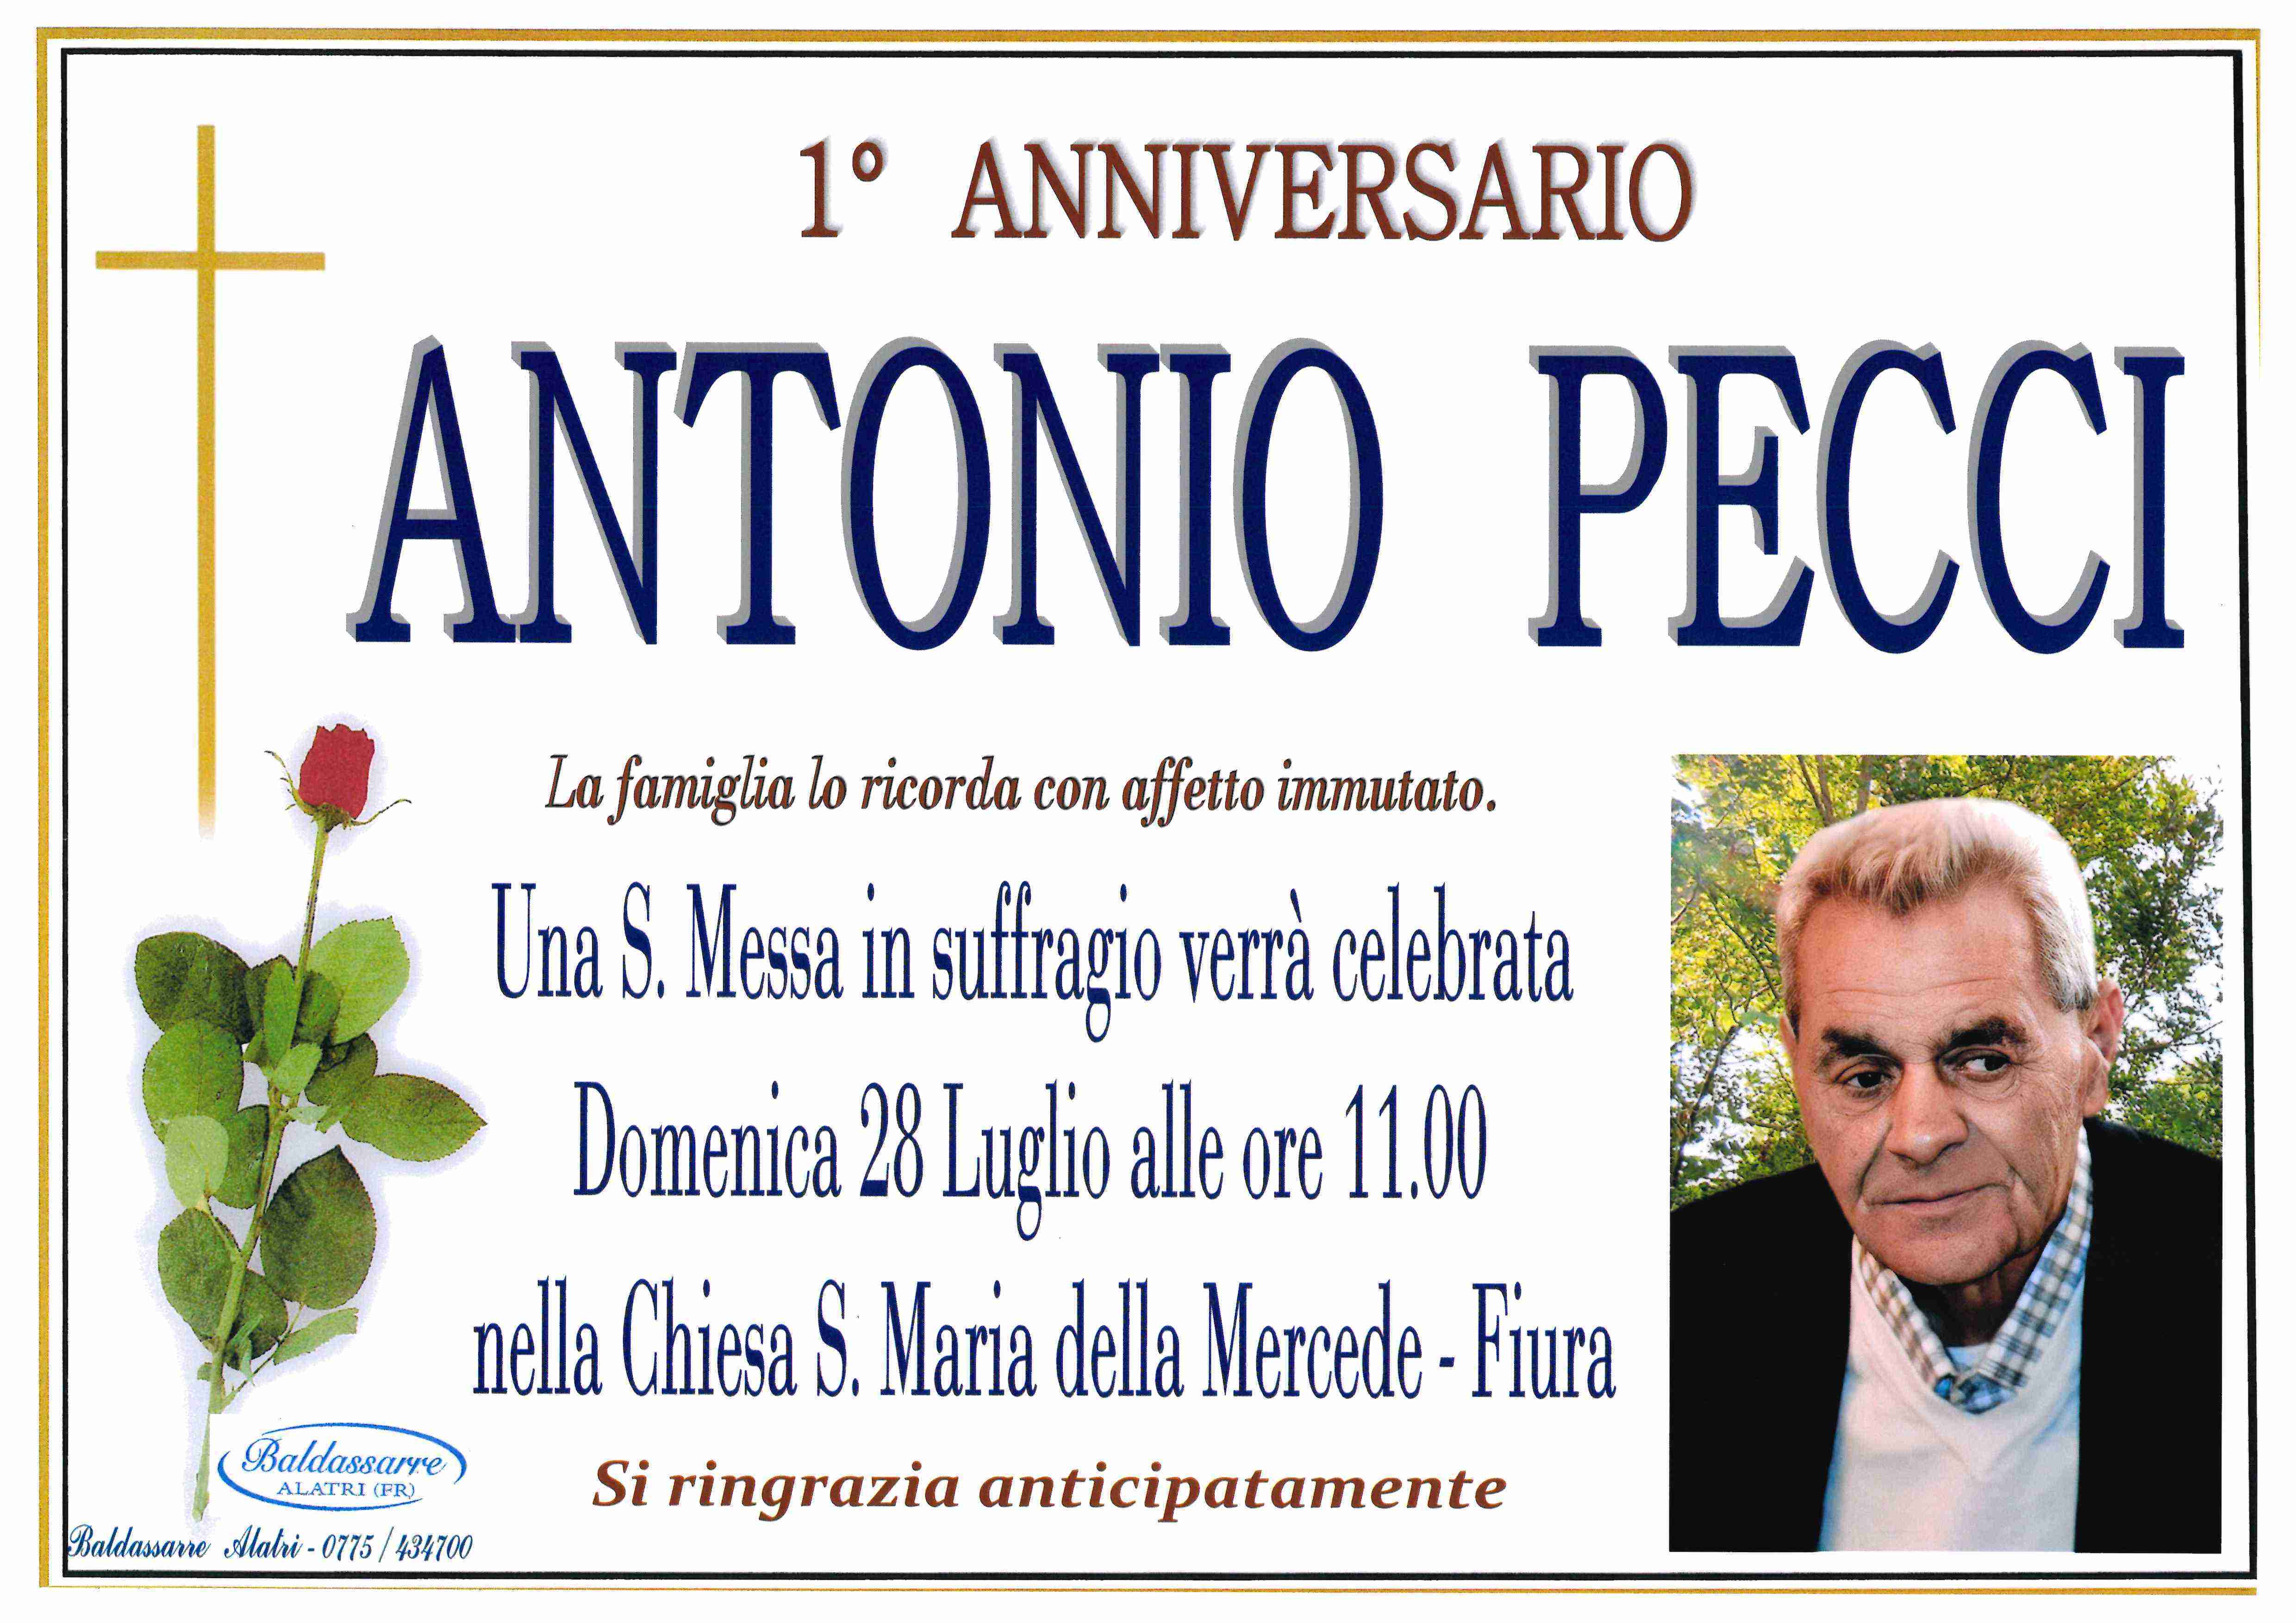 Antonio Pecci